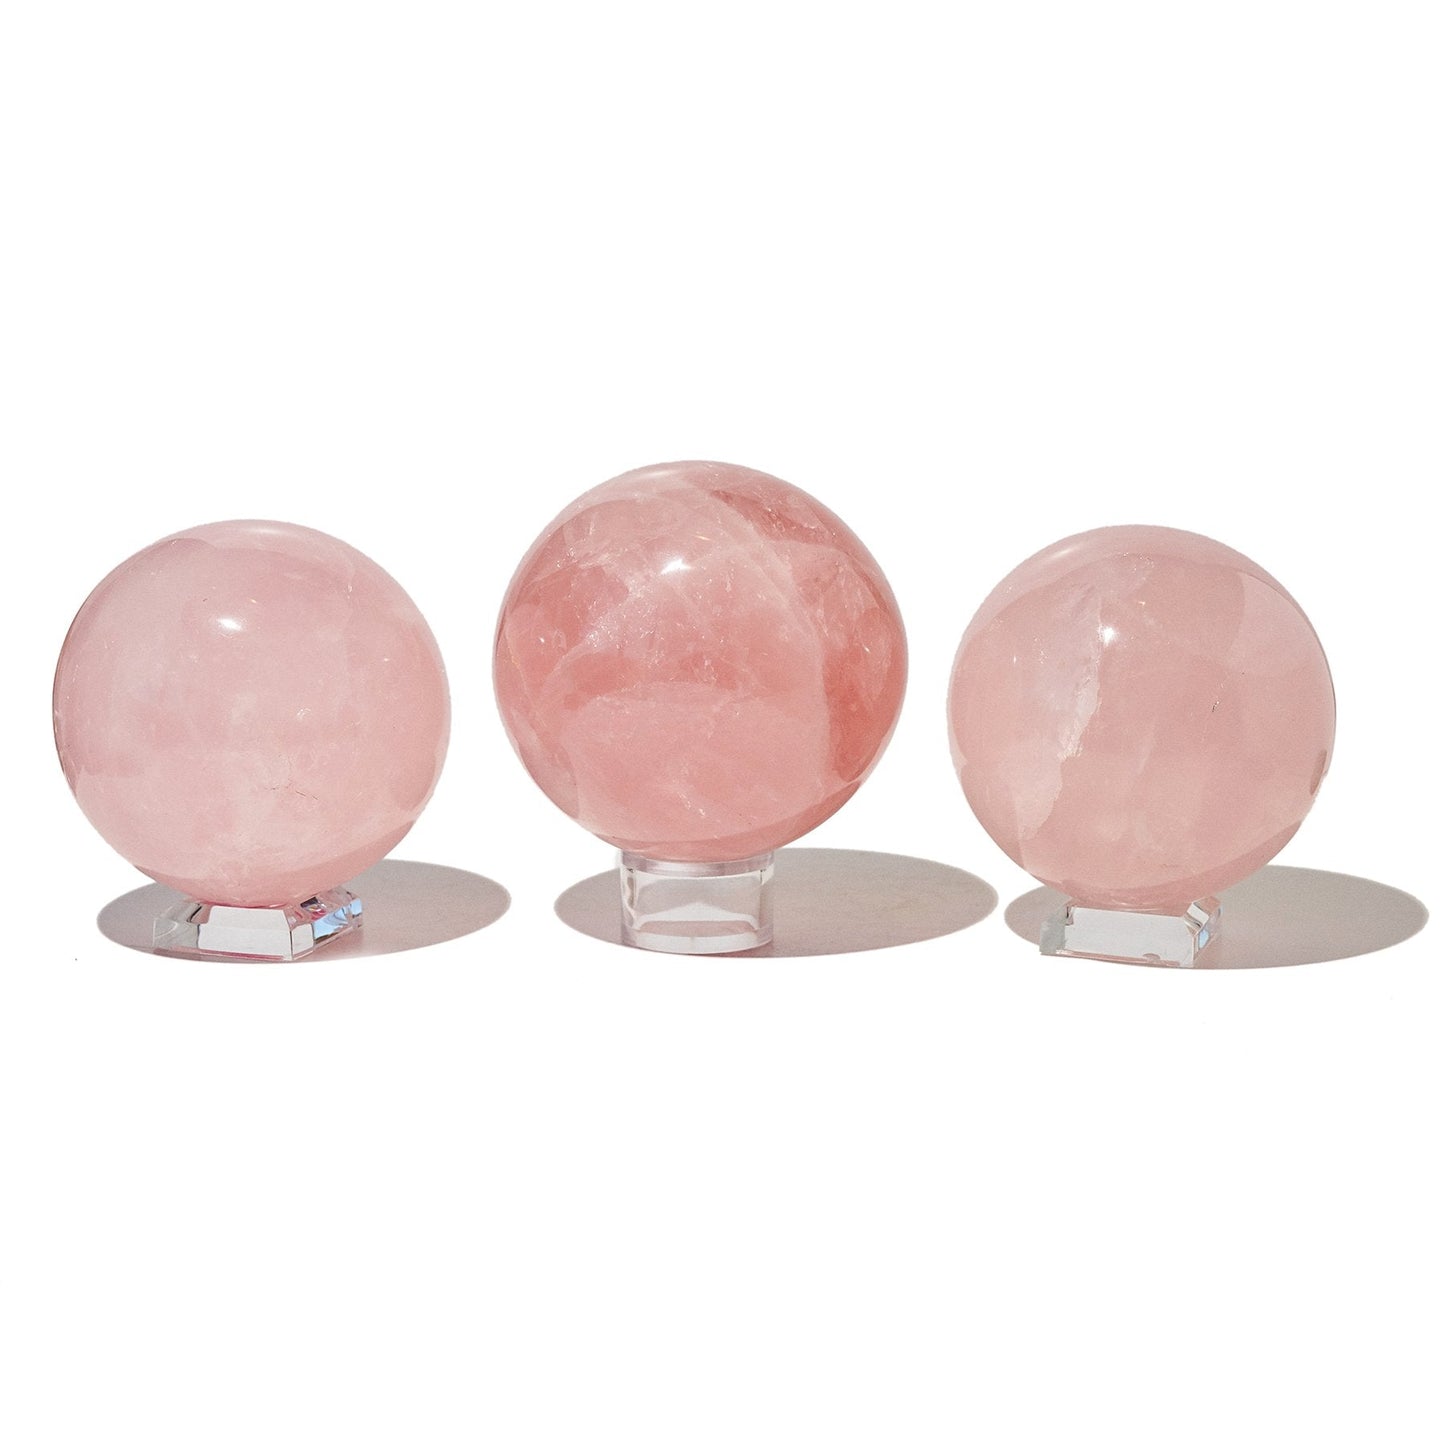 rose quartz crystal benefits